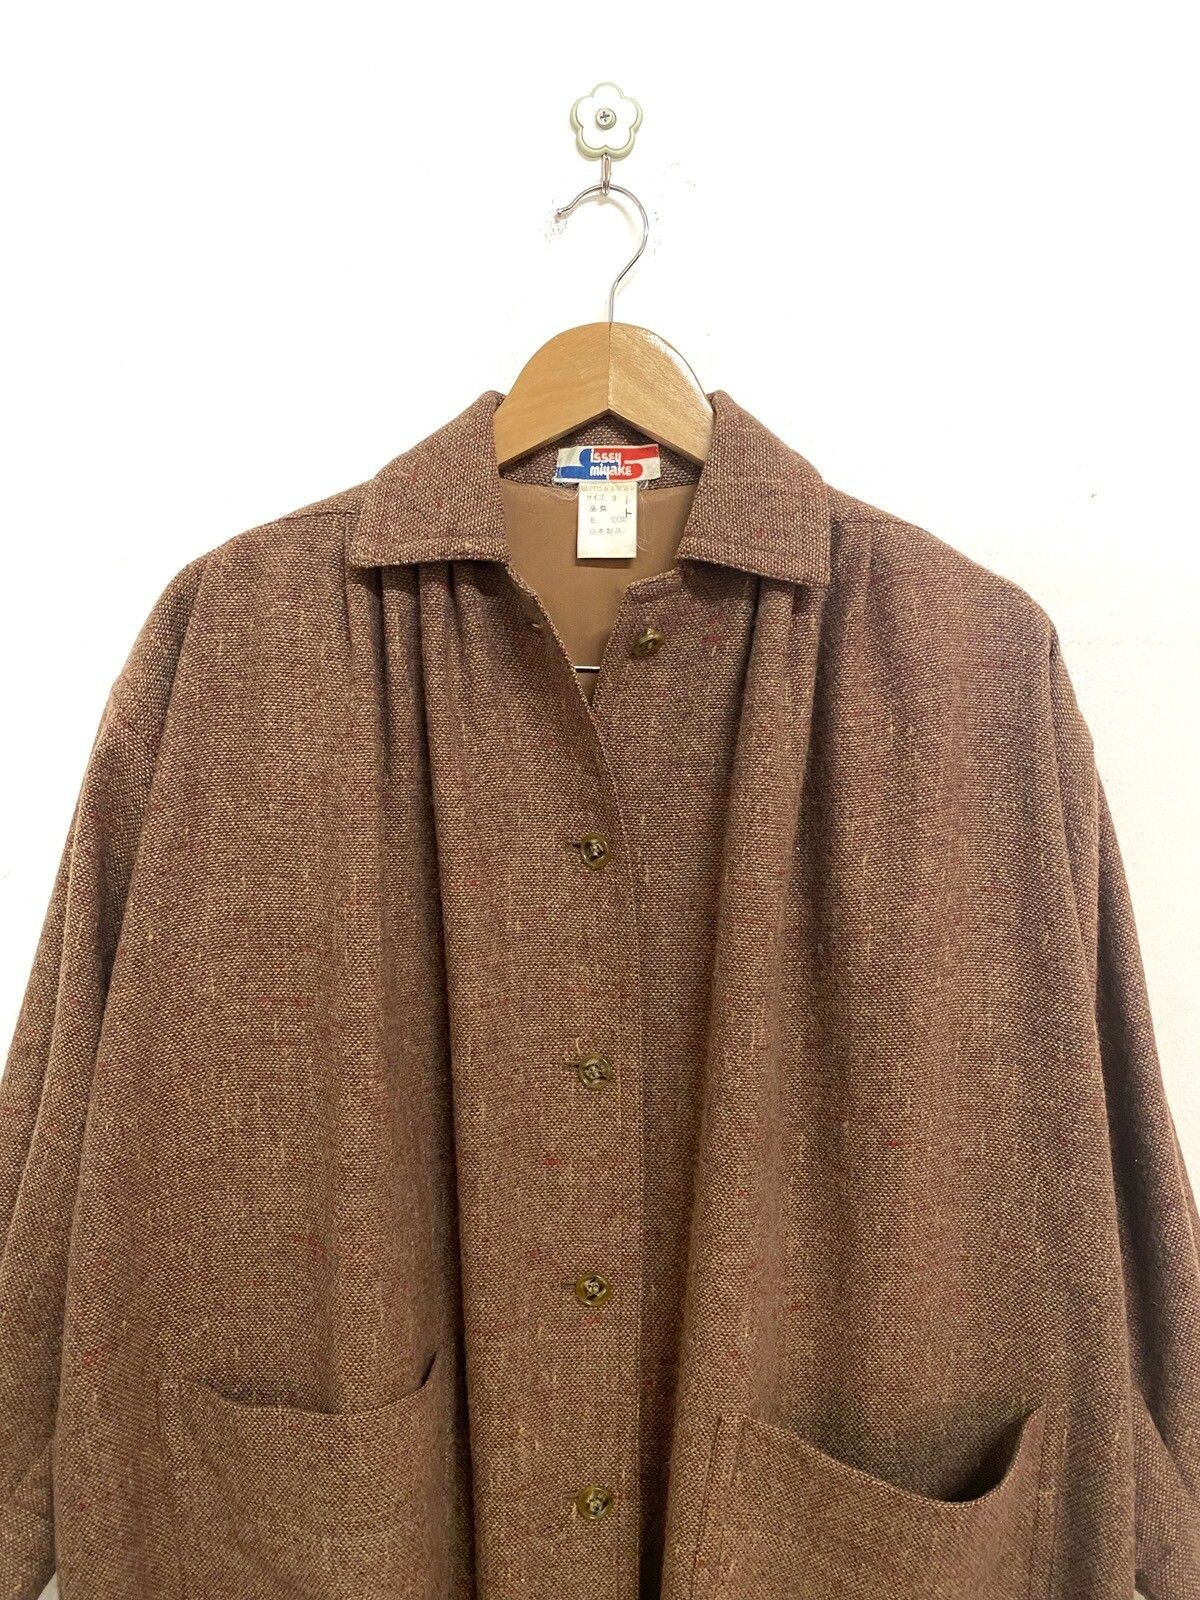 Rare🔥Vintage 70s Issey Miyake Archive Long Jacket - 5